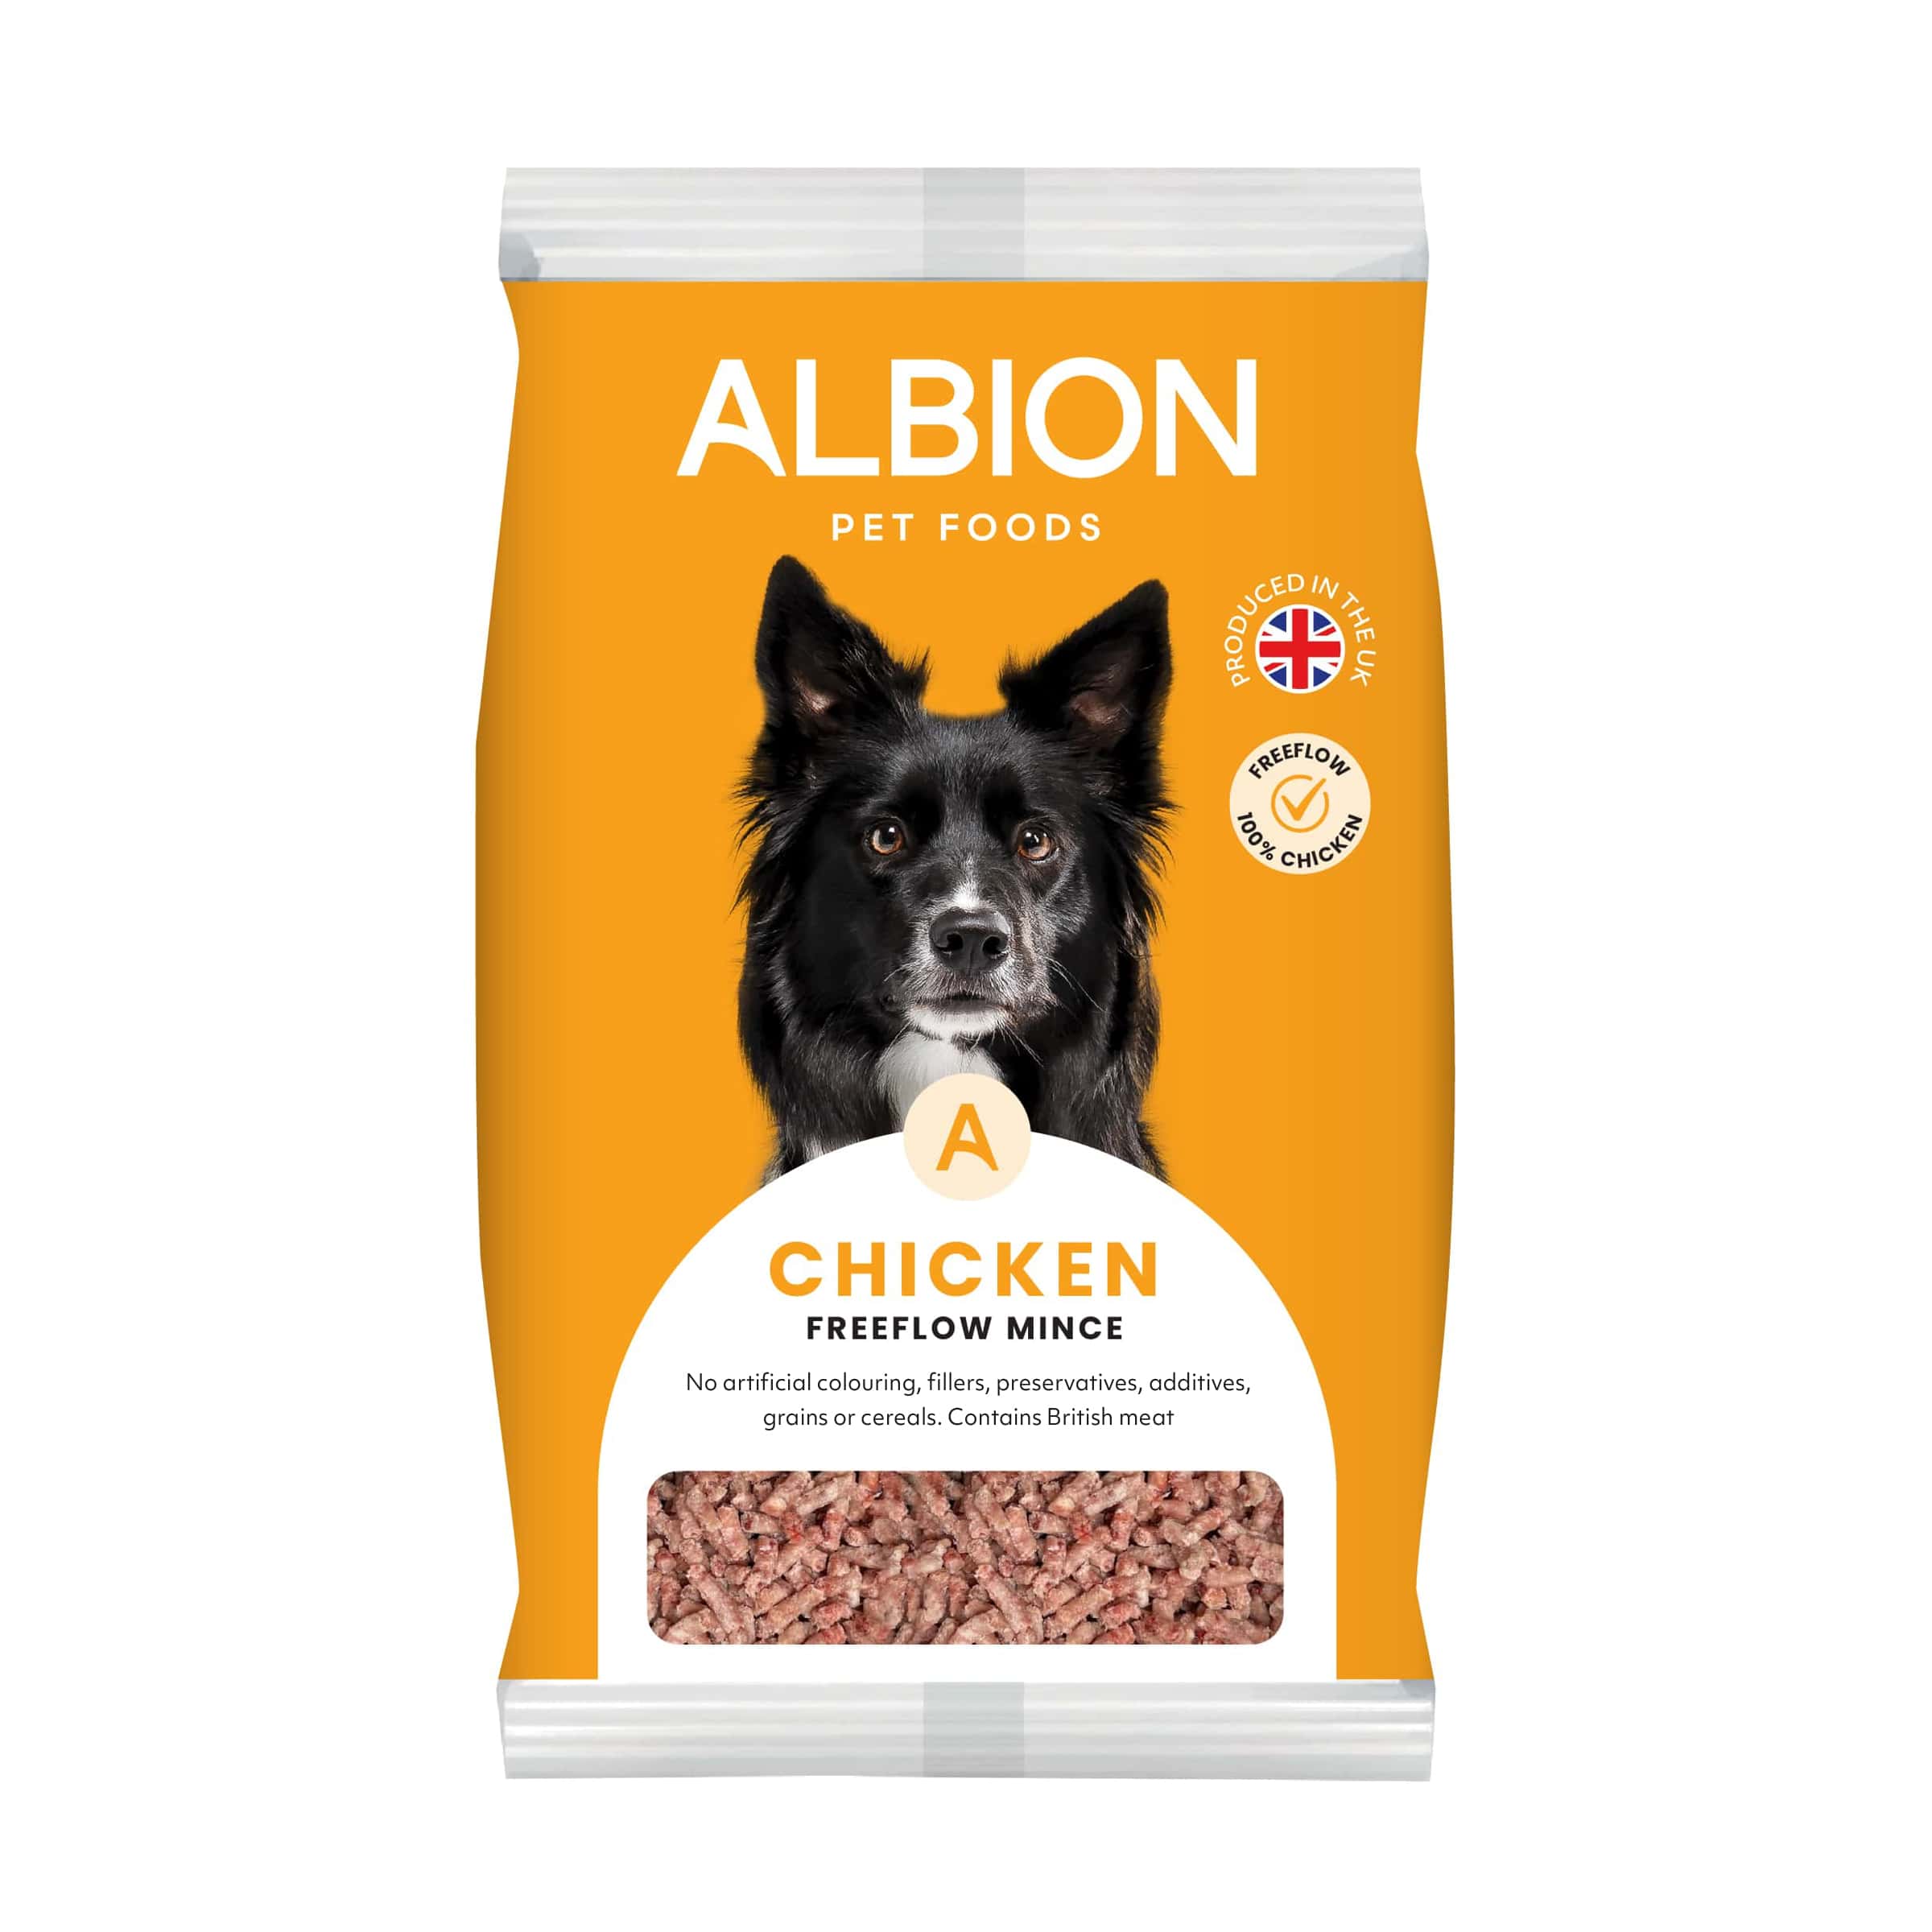 Albion pet foods chicken freeflow range packaging